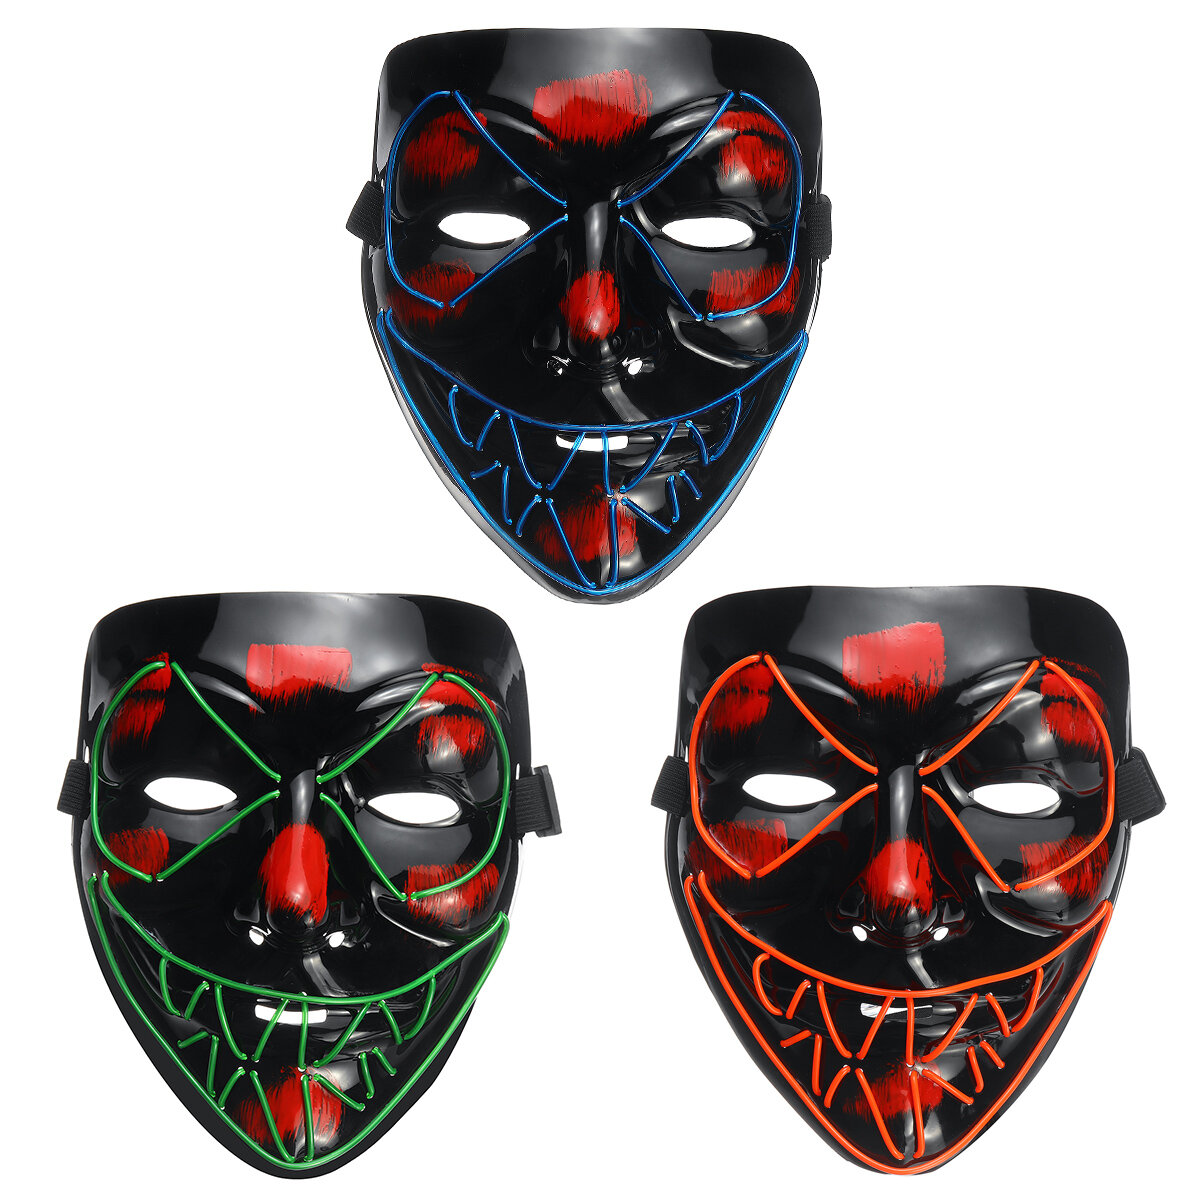 Skeletmasker EL Wire Light Up Skull Mask voor Halloween-kostuumaccessoire